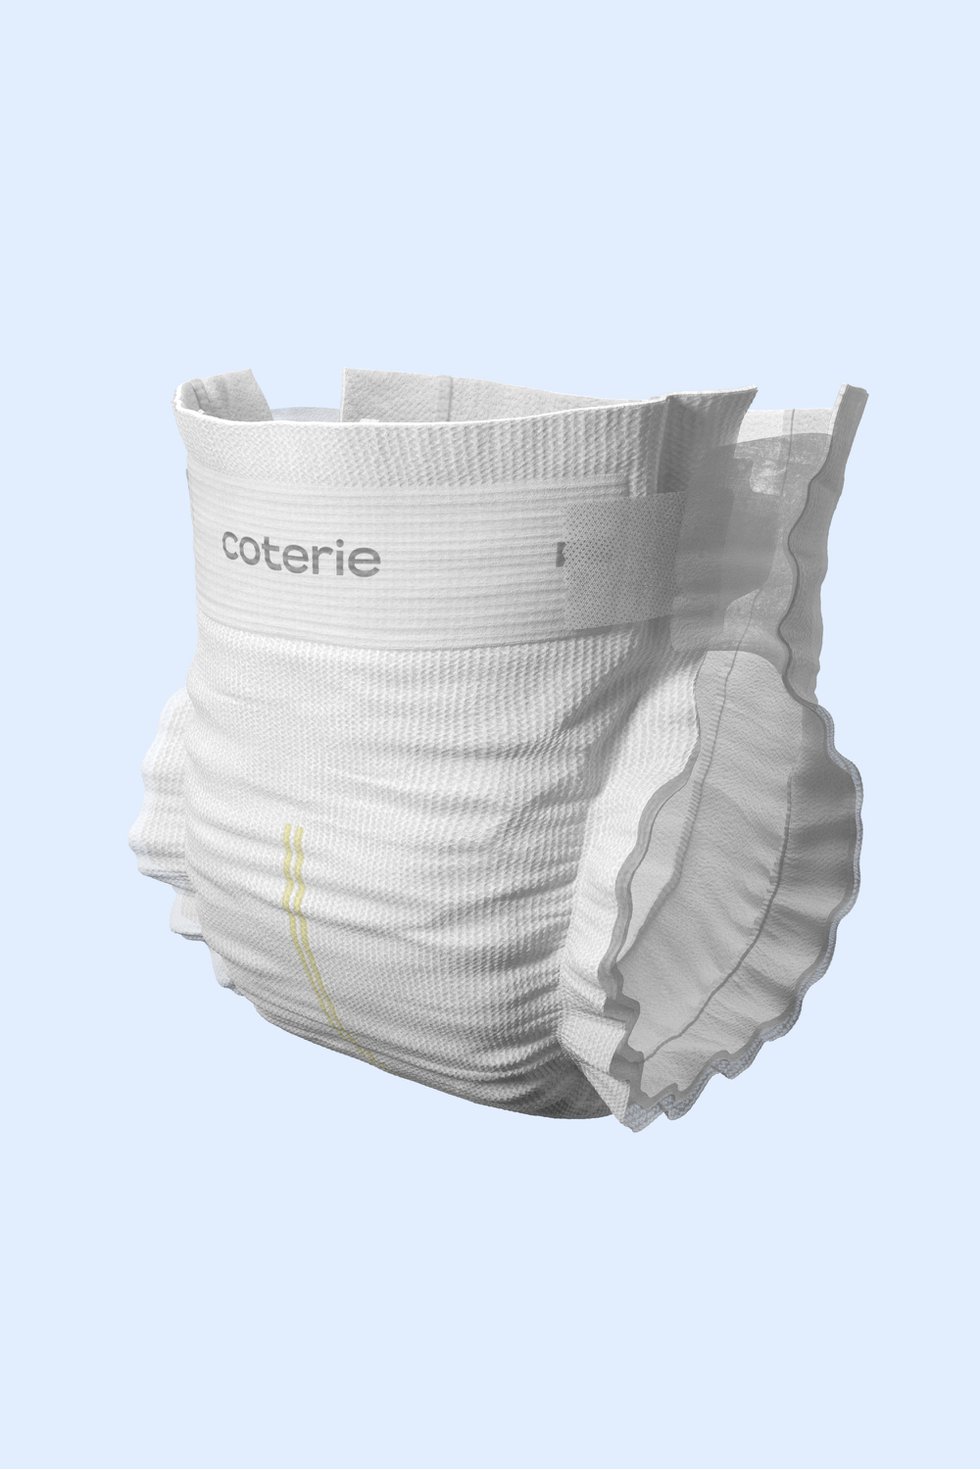 The Coterie Diaper product shot.jpeg